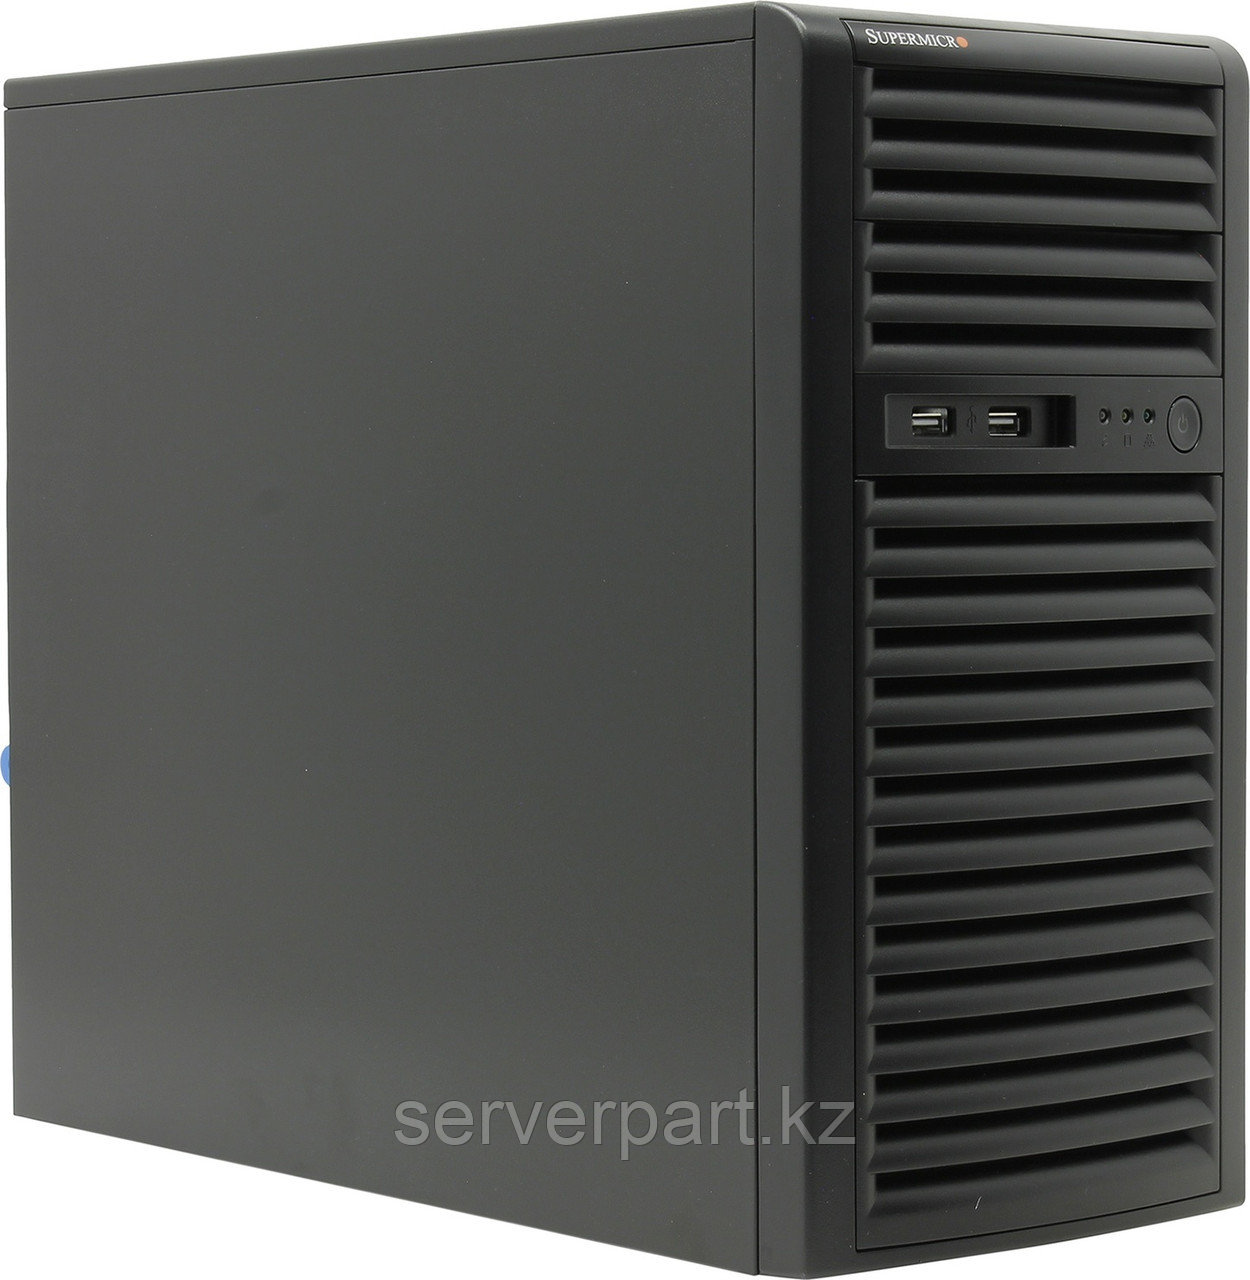 Сервер Supermicro SYS-5039D Tower/4-core intel xeon E3-1220v6 3GHz/64GB EUDIMM/1x960GB SSD RI Hyb